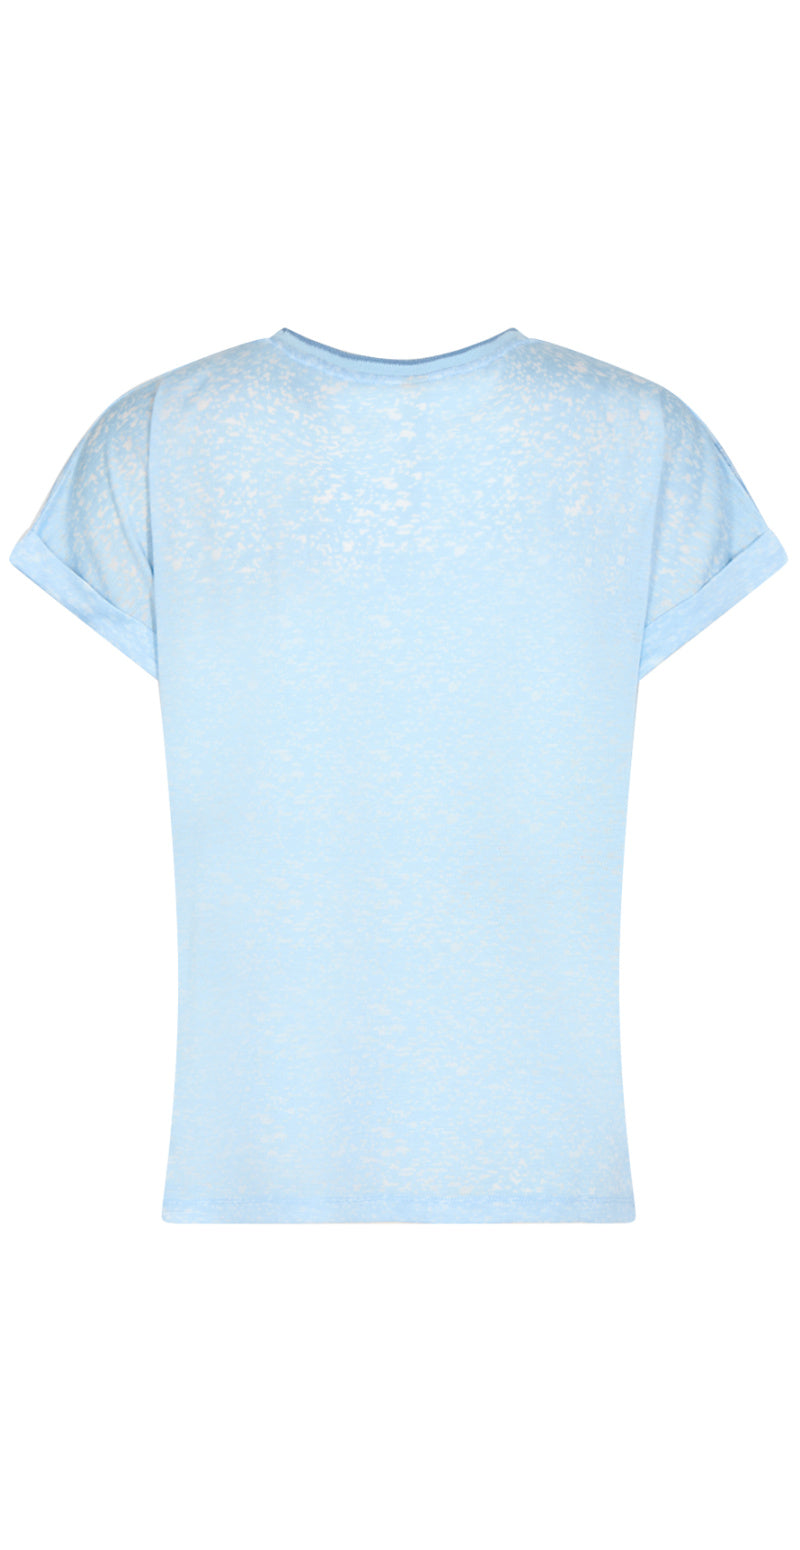 T-shirt med print lysblå